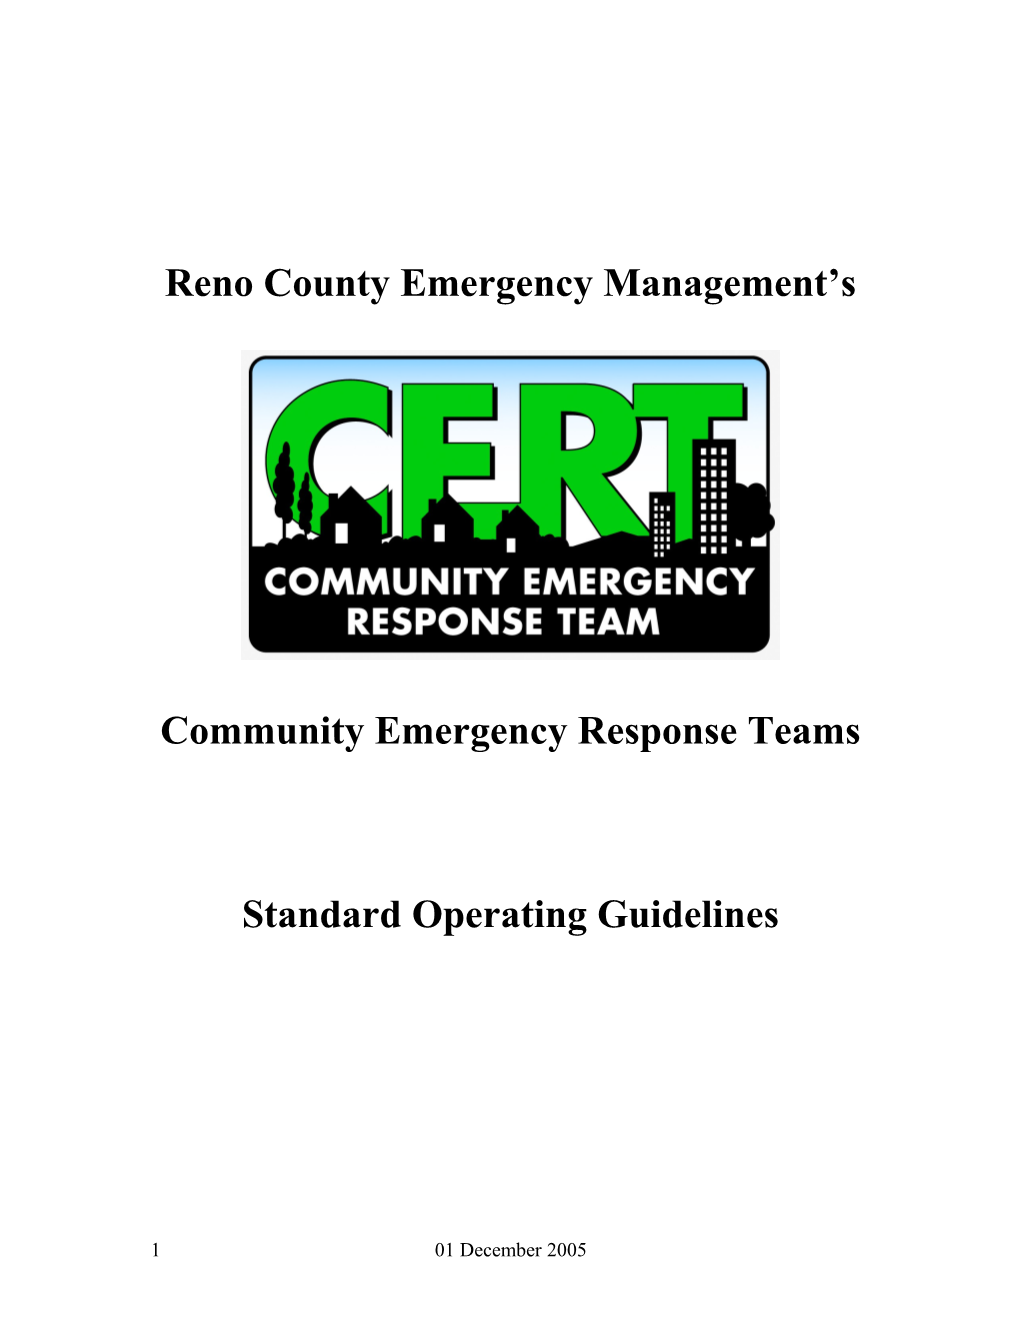 Reno County Community Emergency Response Teams